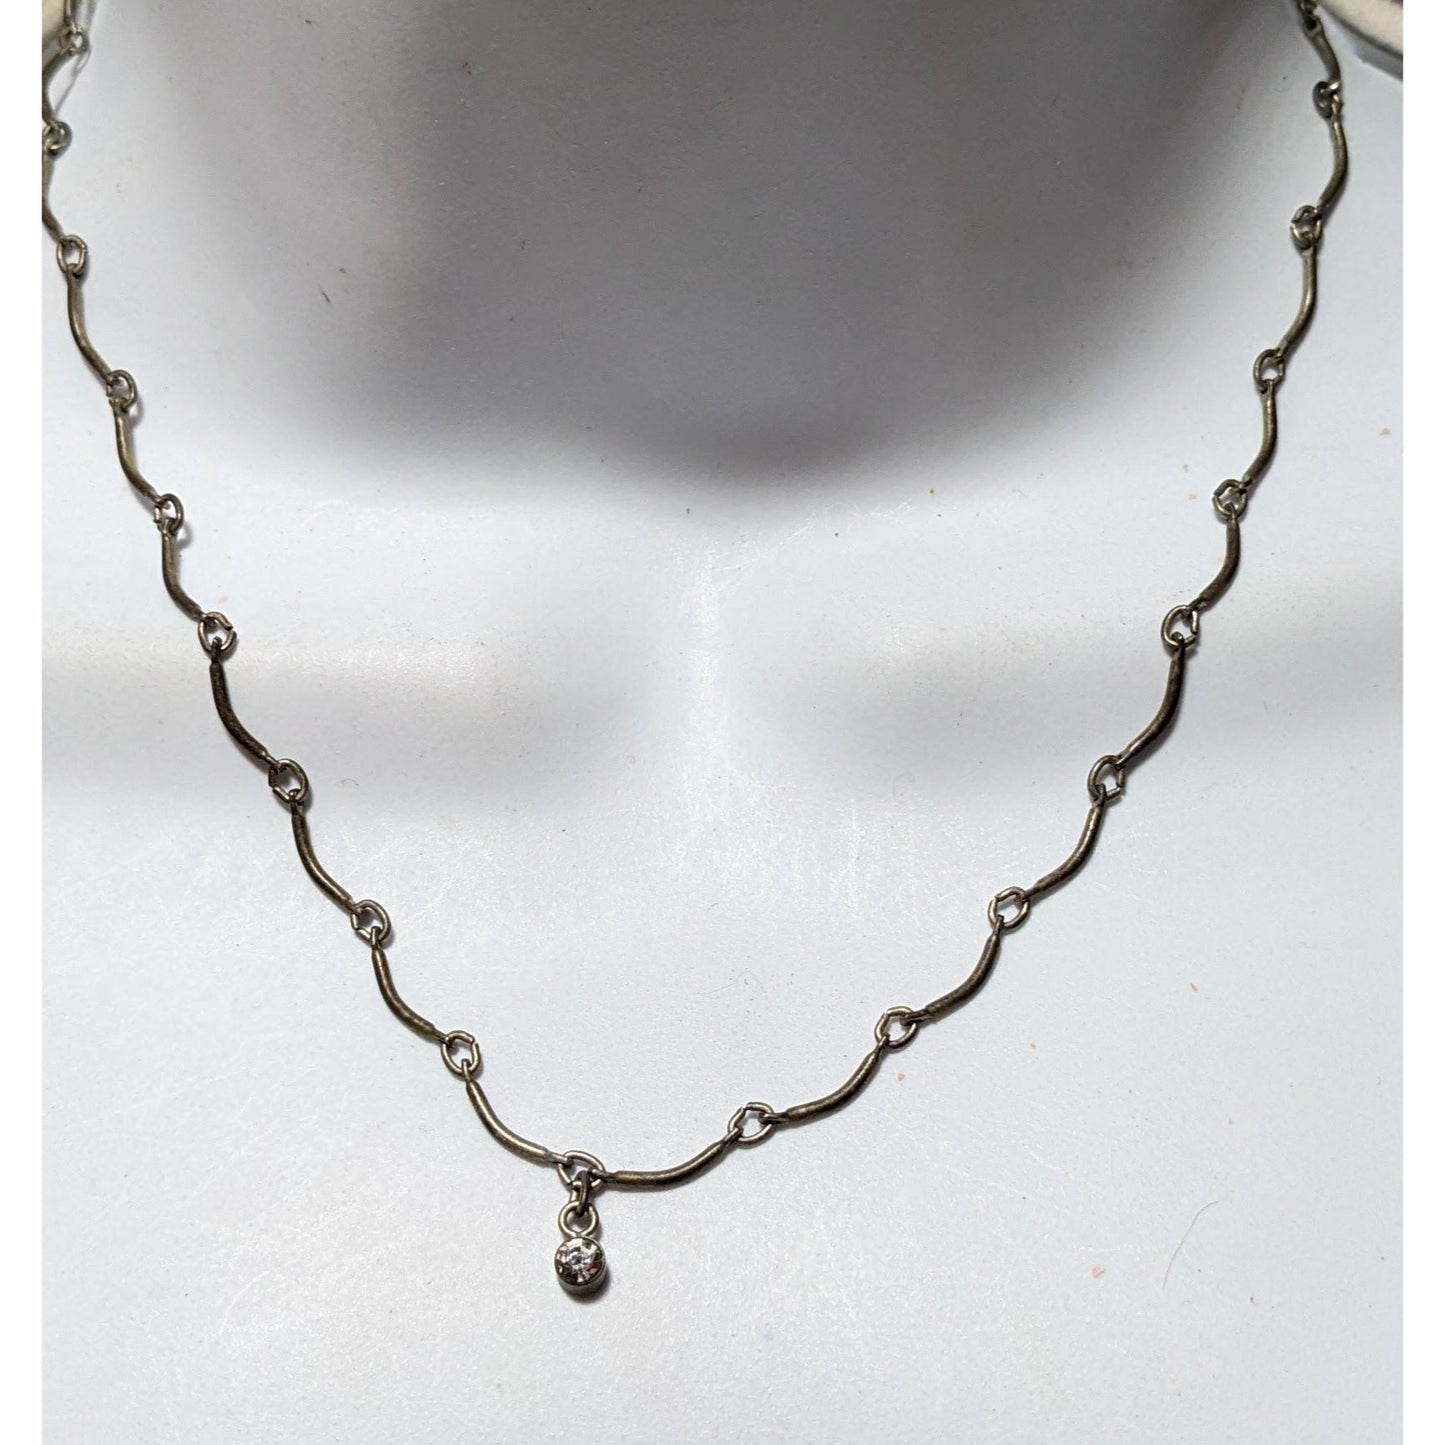 Minimalist Rhinestone Curved Bar Necklace